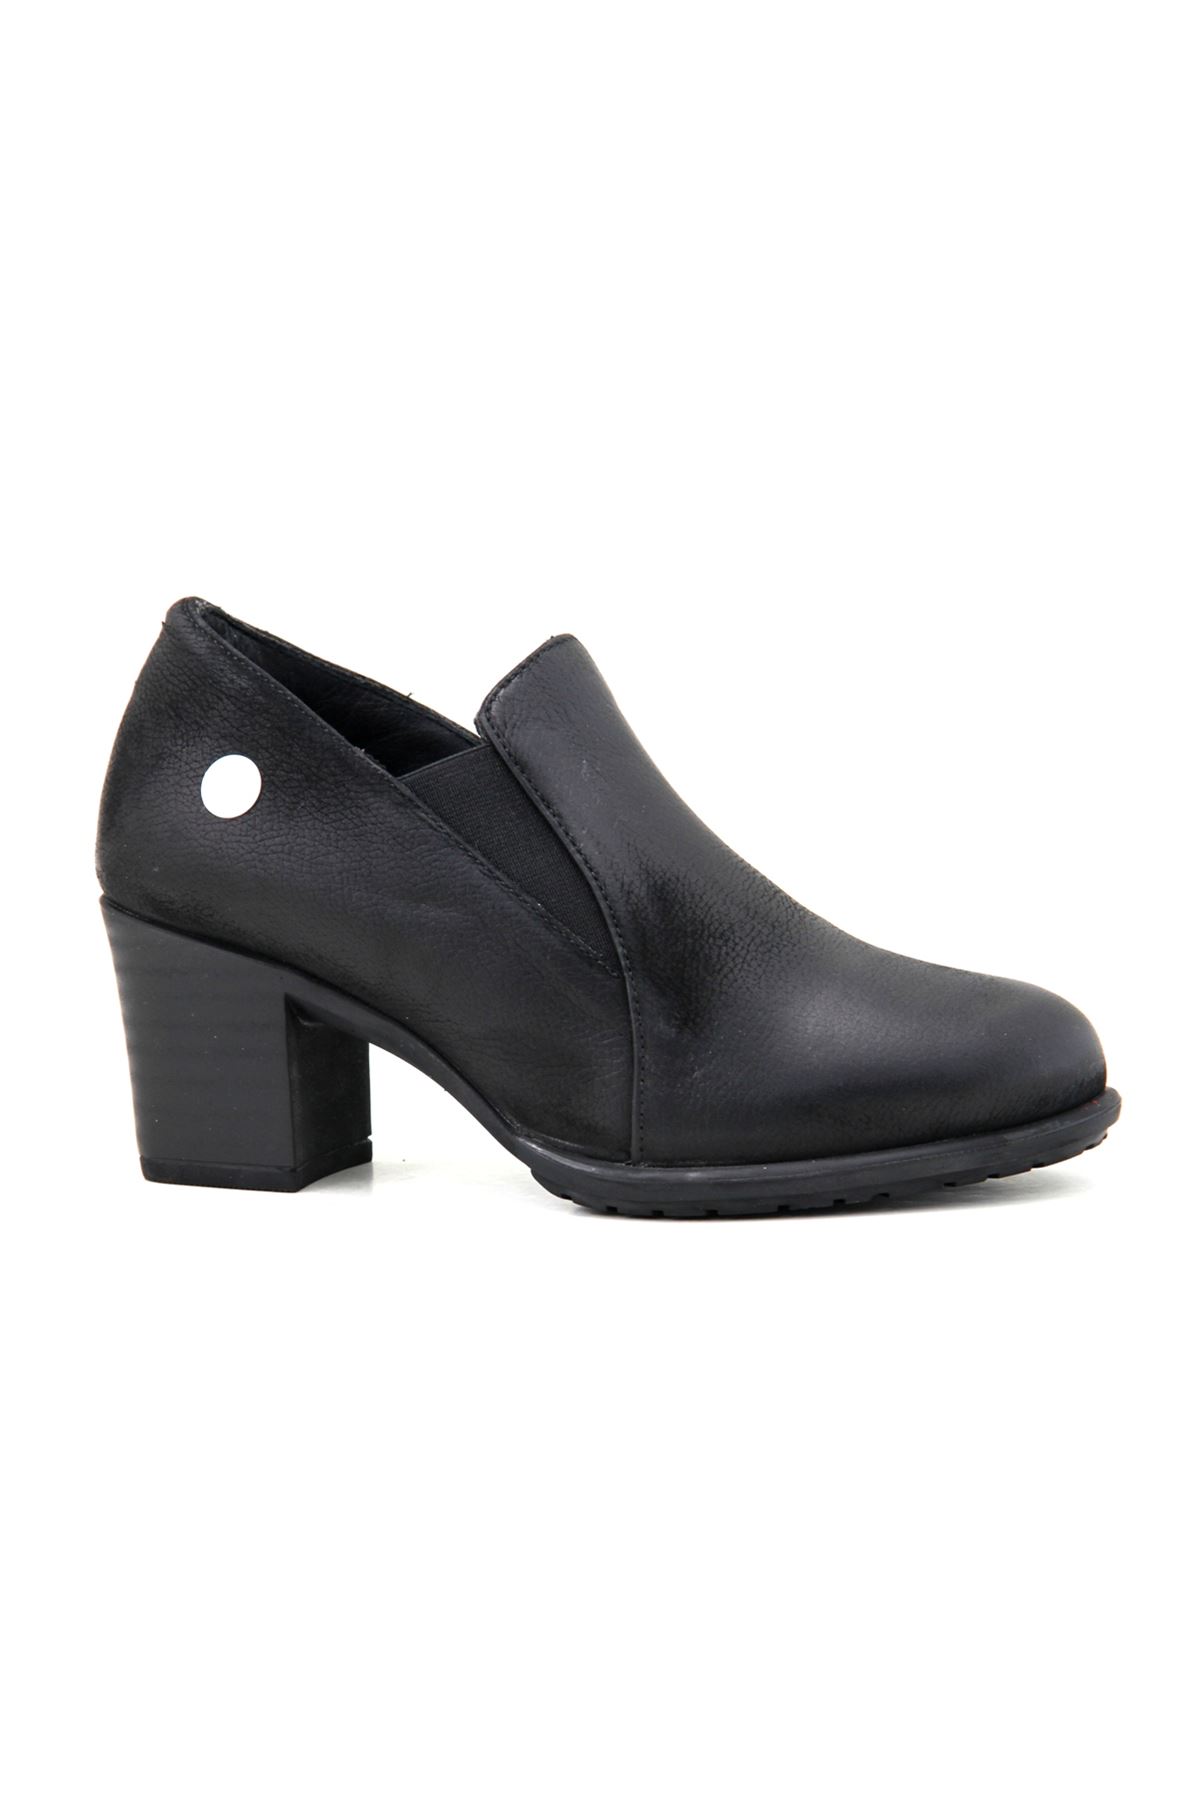 Mammamia D23KA-6115 Hakiki Deri Kadın Ayakkabı - Siyah Nubuk